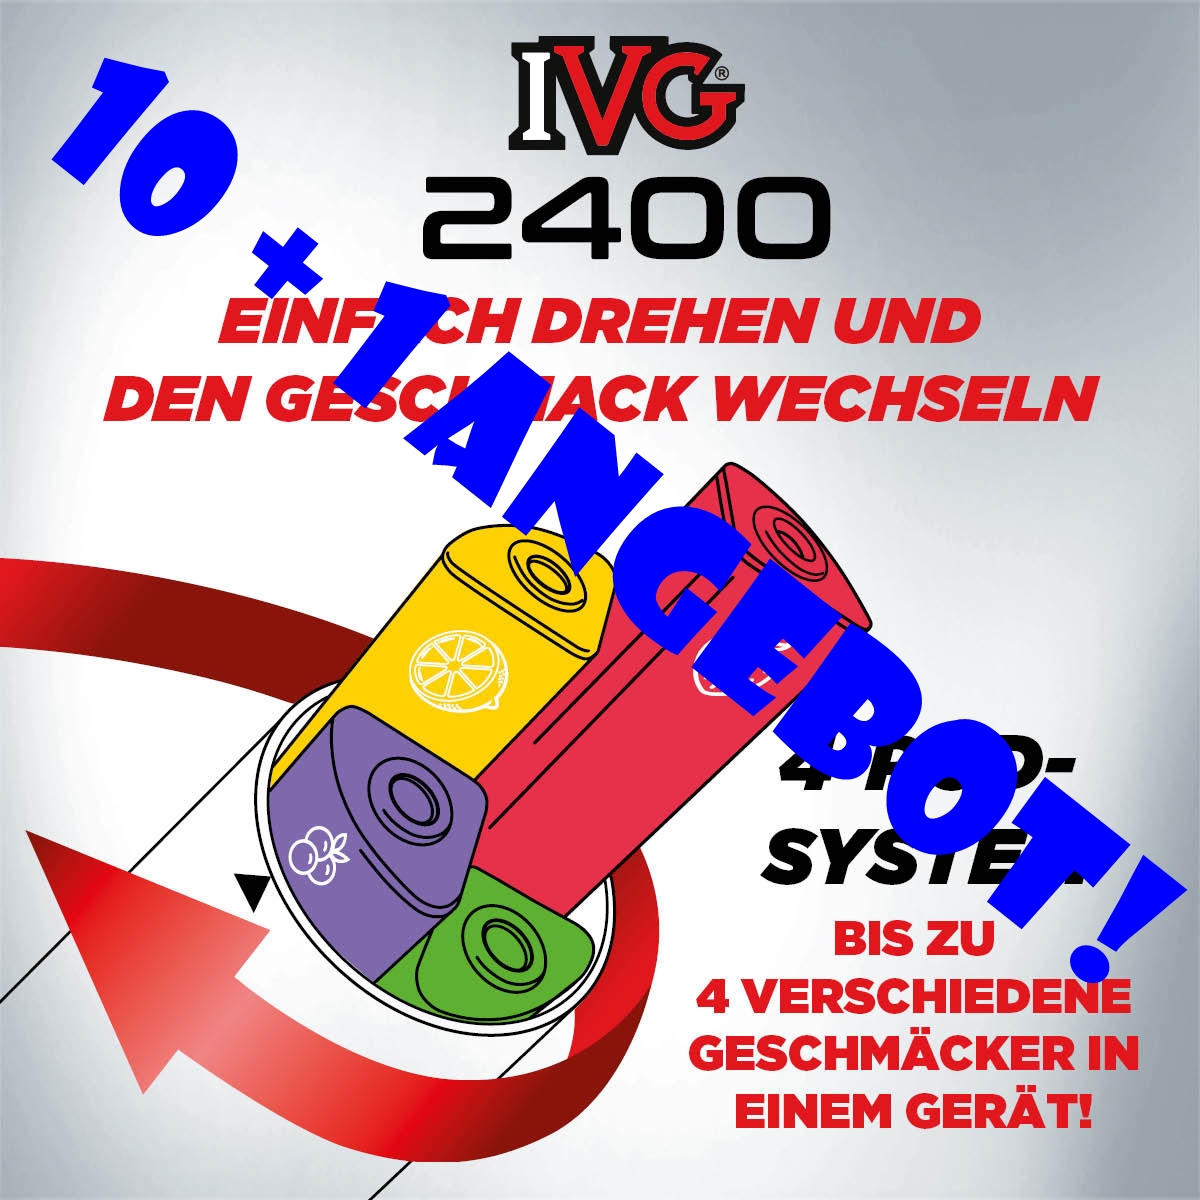 IVG 2400 Angebot